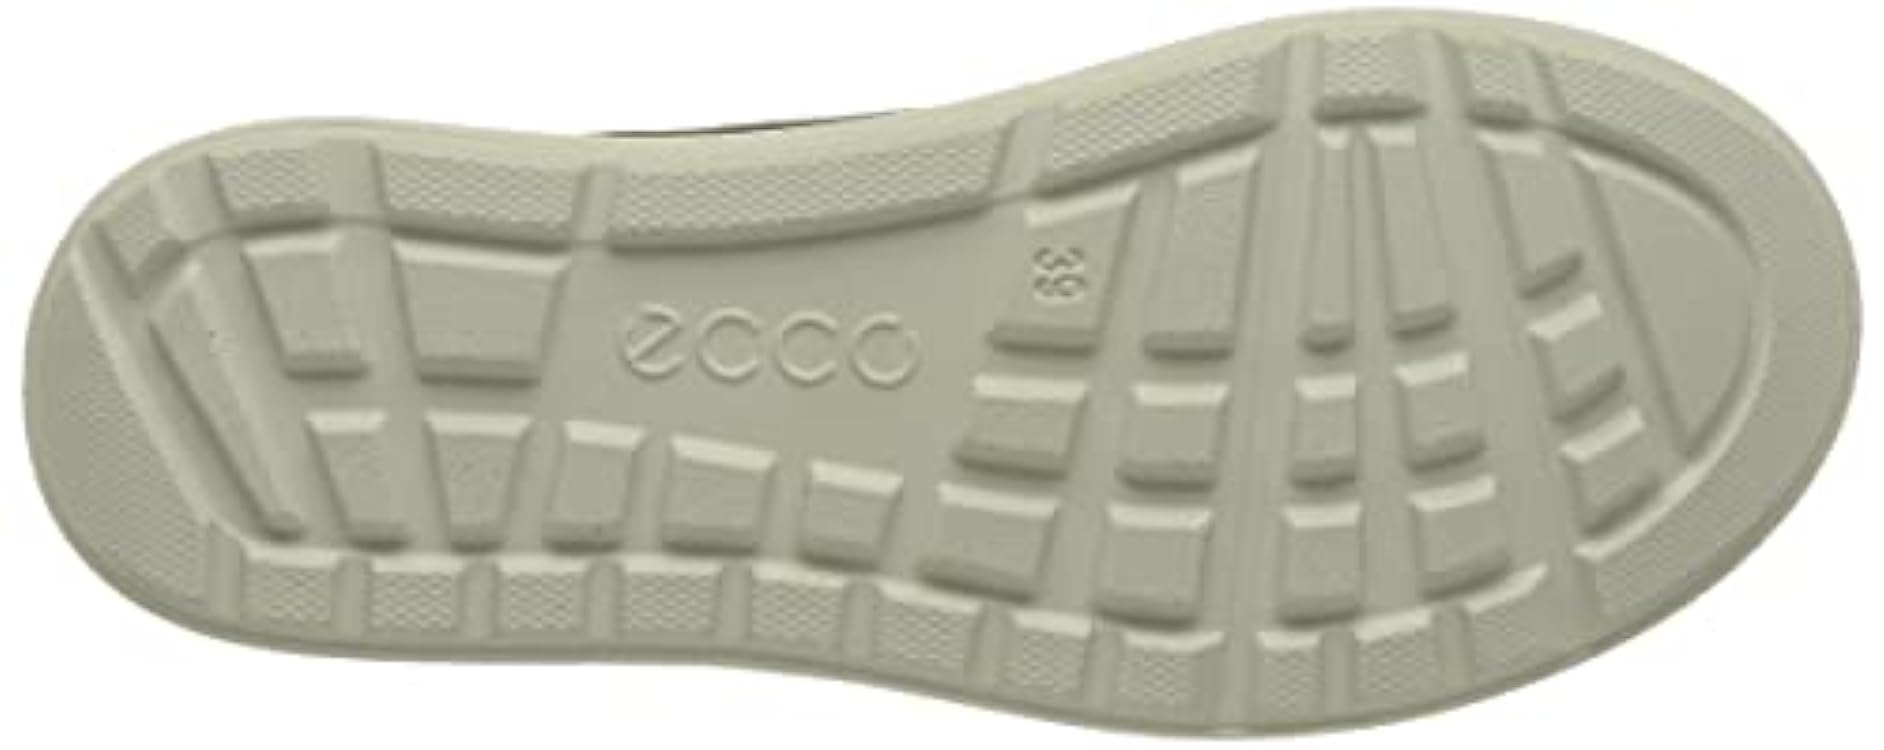 ECCO Mädchen Urban Snowboarder Mid-Cut Boot 278929059